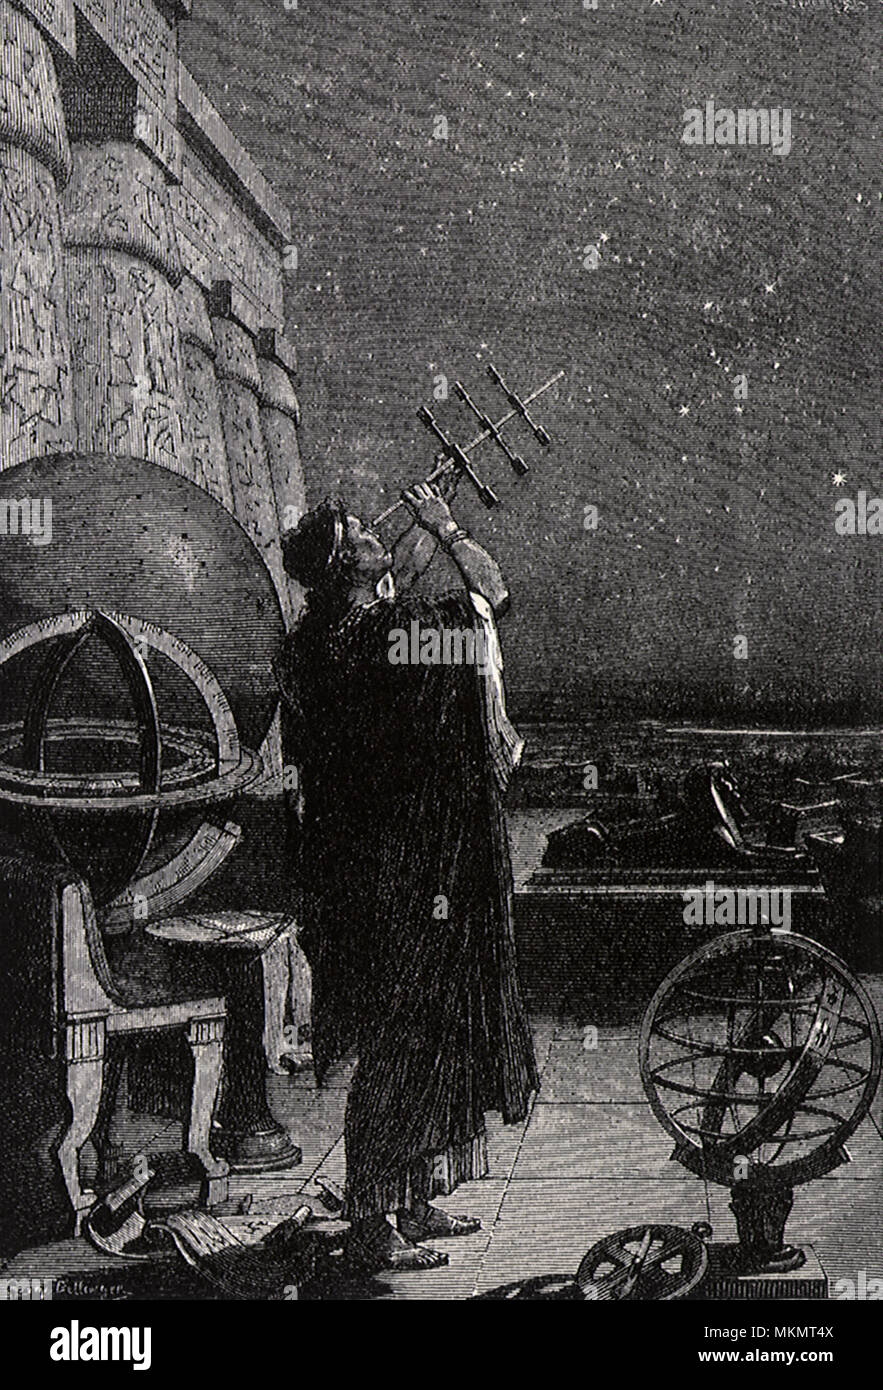 Ancient Astronomer Stock Photo